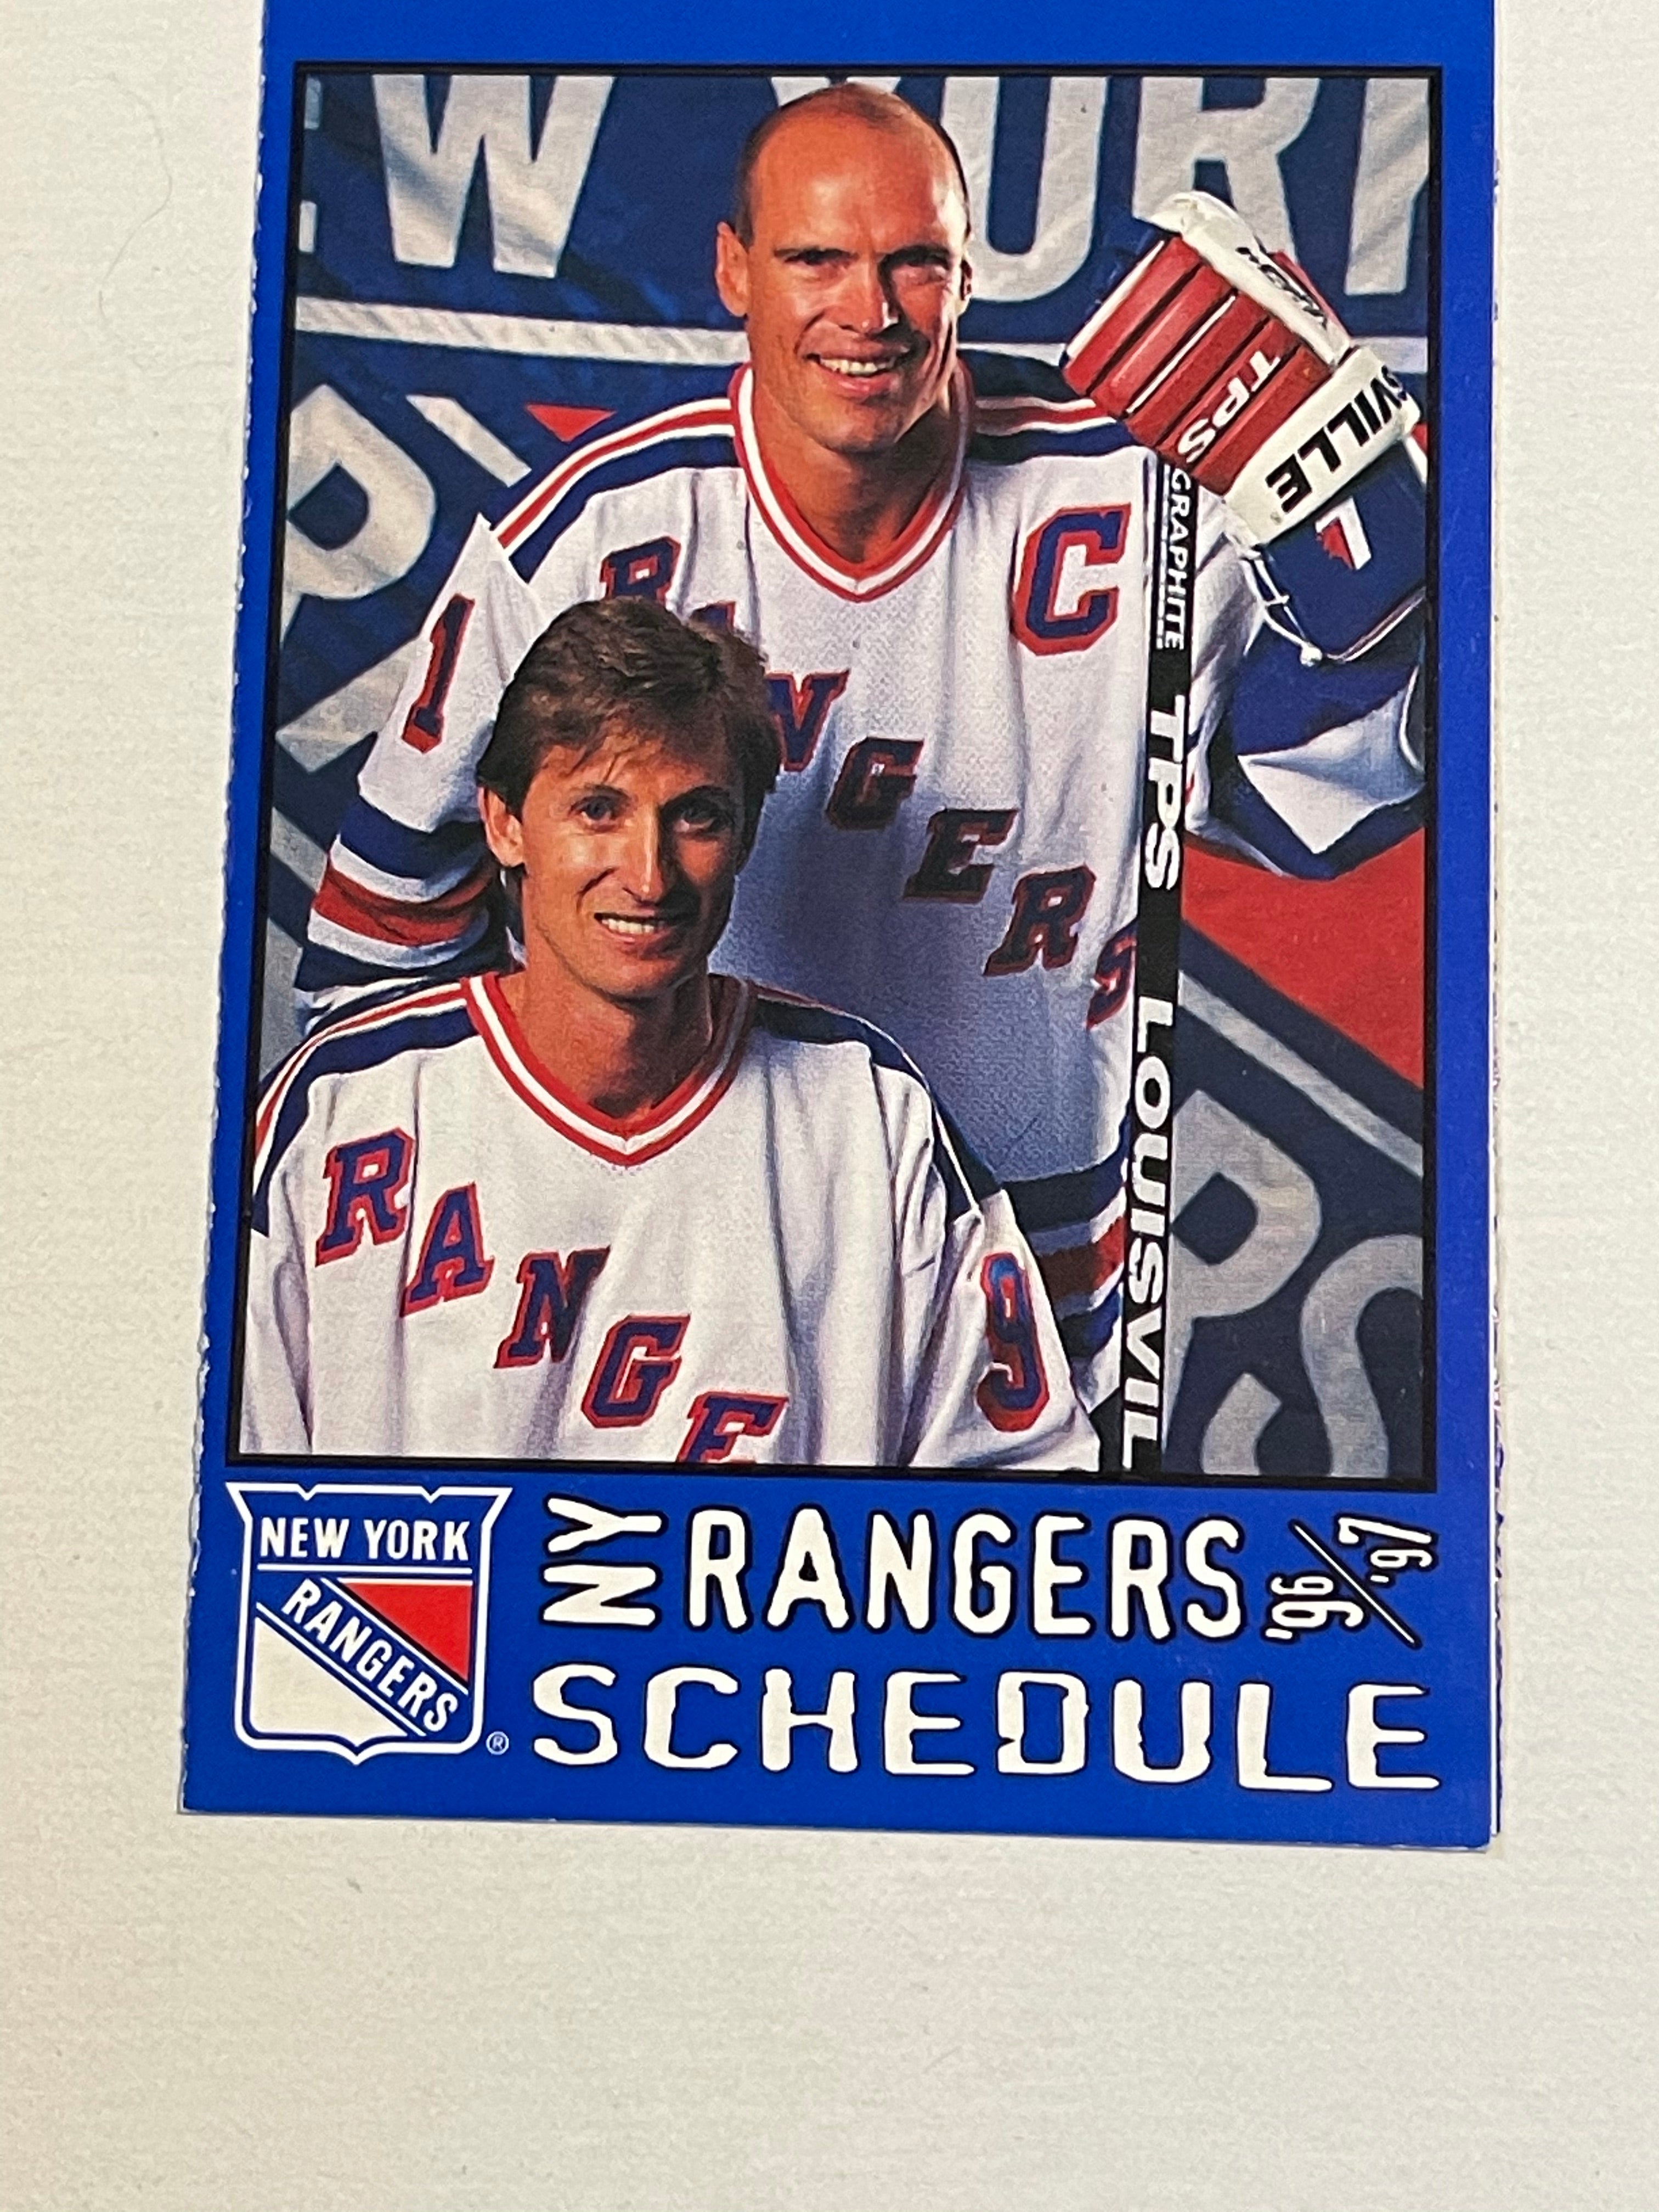 1996 Wayne Gretzky New York Rangers vintage hockey pocket schedule